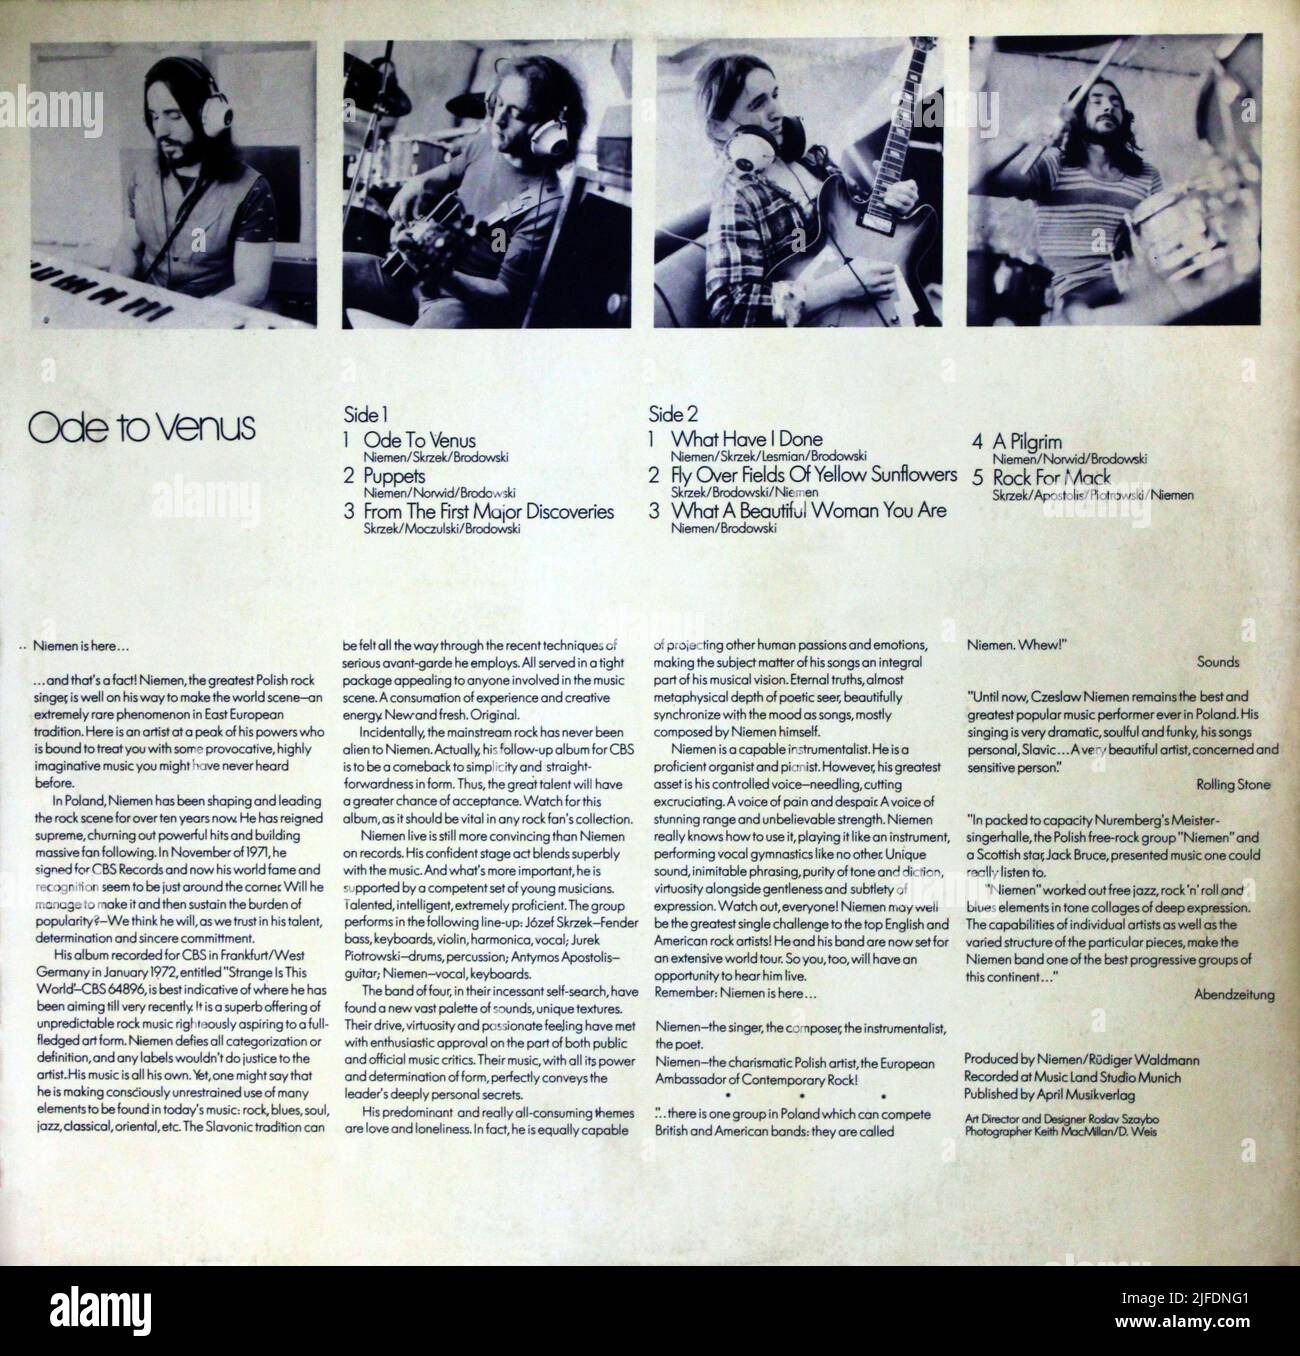 Niemen: 1973. Contraportada de LP 'Ode a Venus' Foto de stock